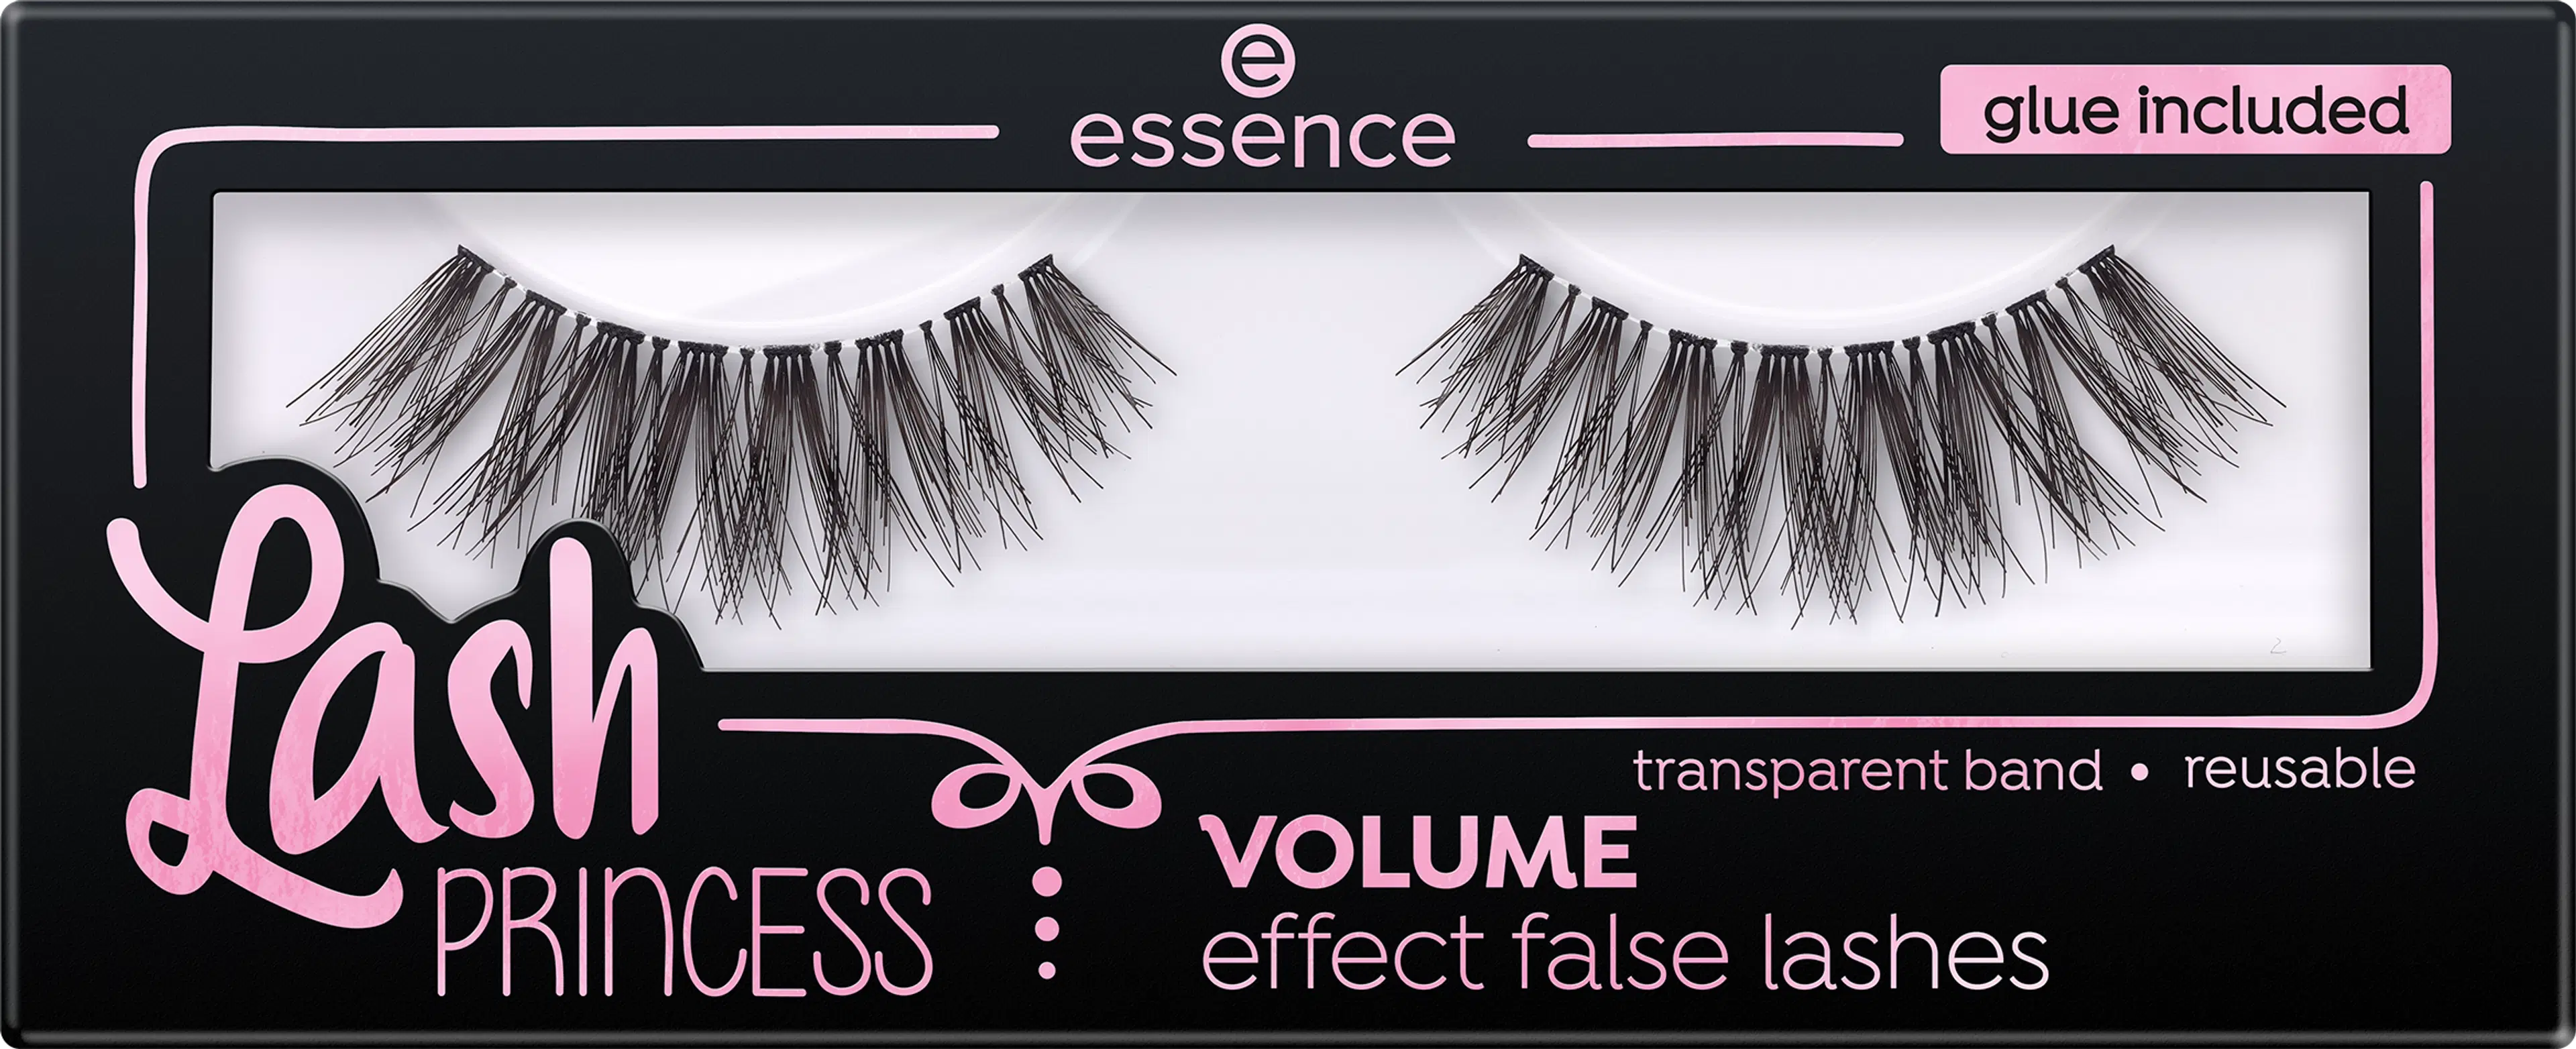 essence Lash PRINCESS VOLUME effect false lashes irtoripset